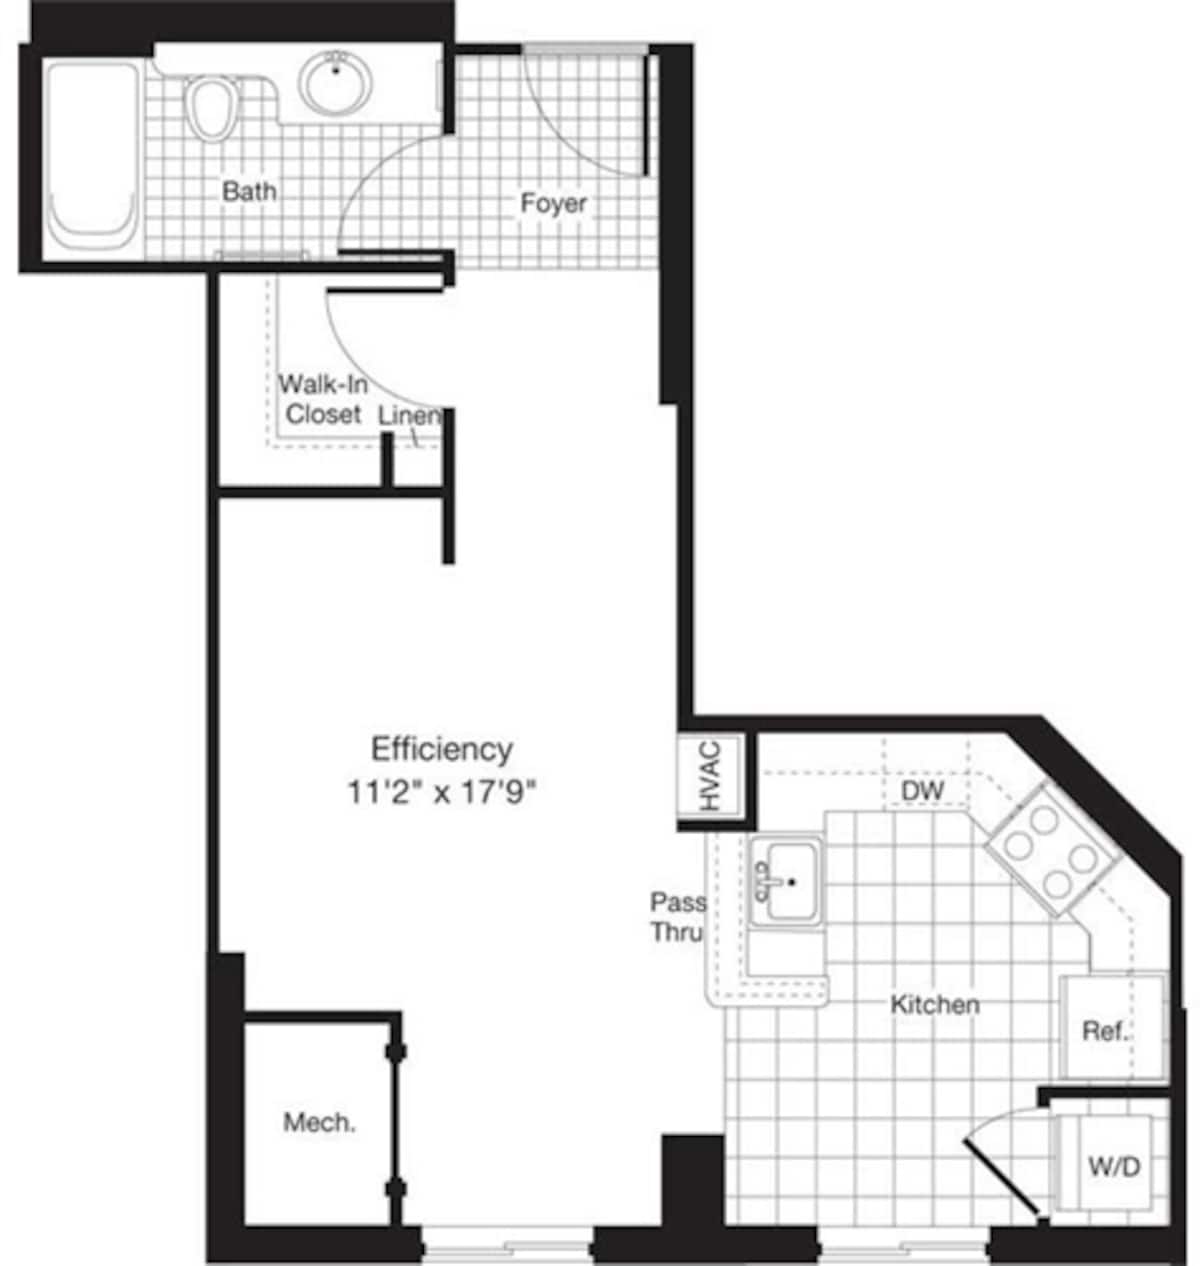 Floorplan diagram for Studio A, showing Studio